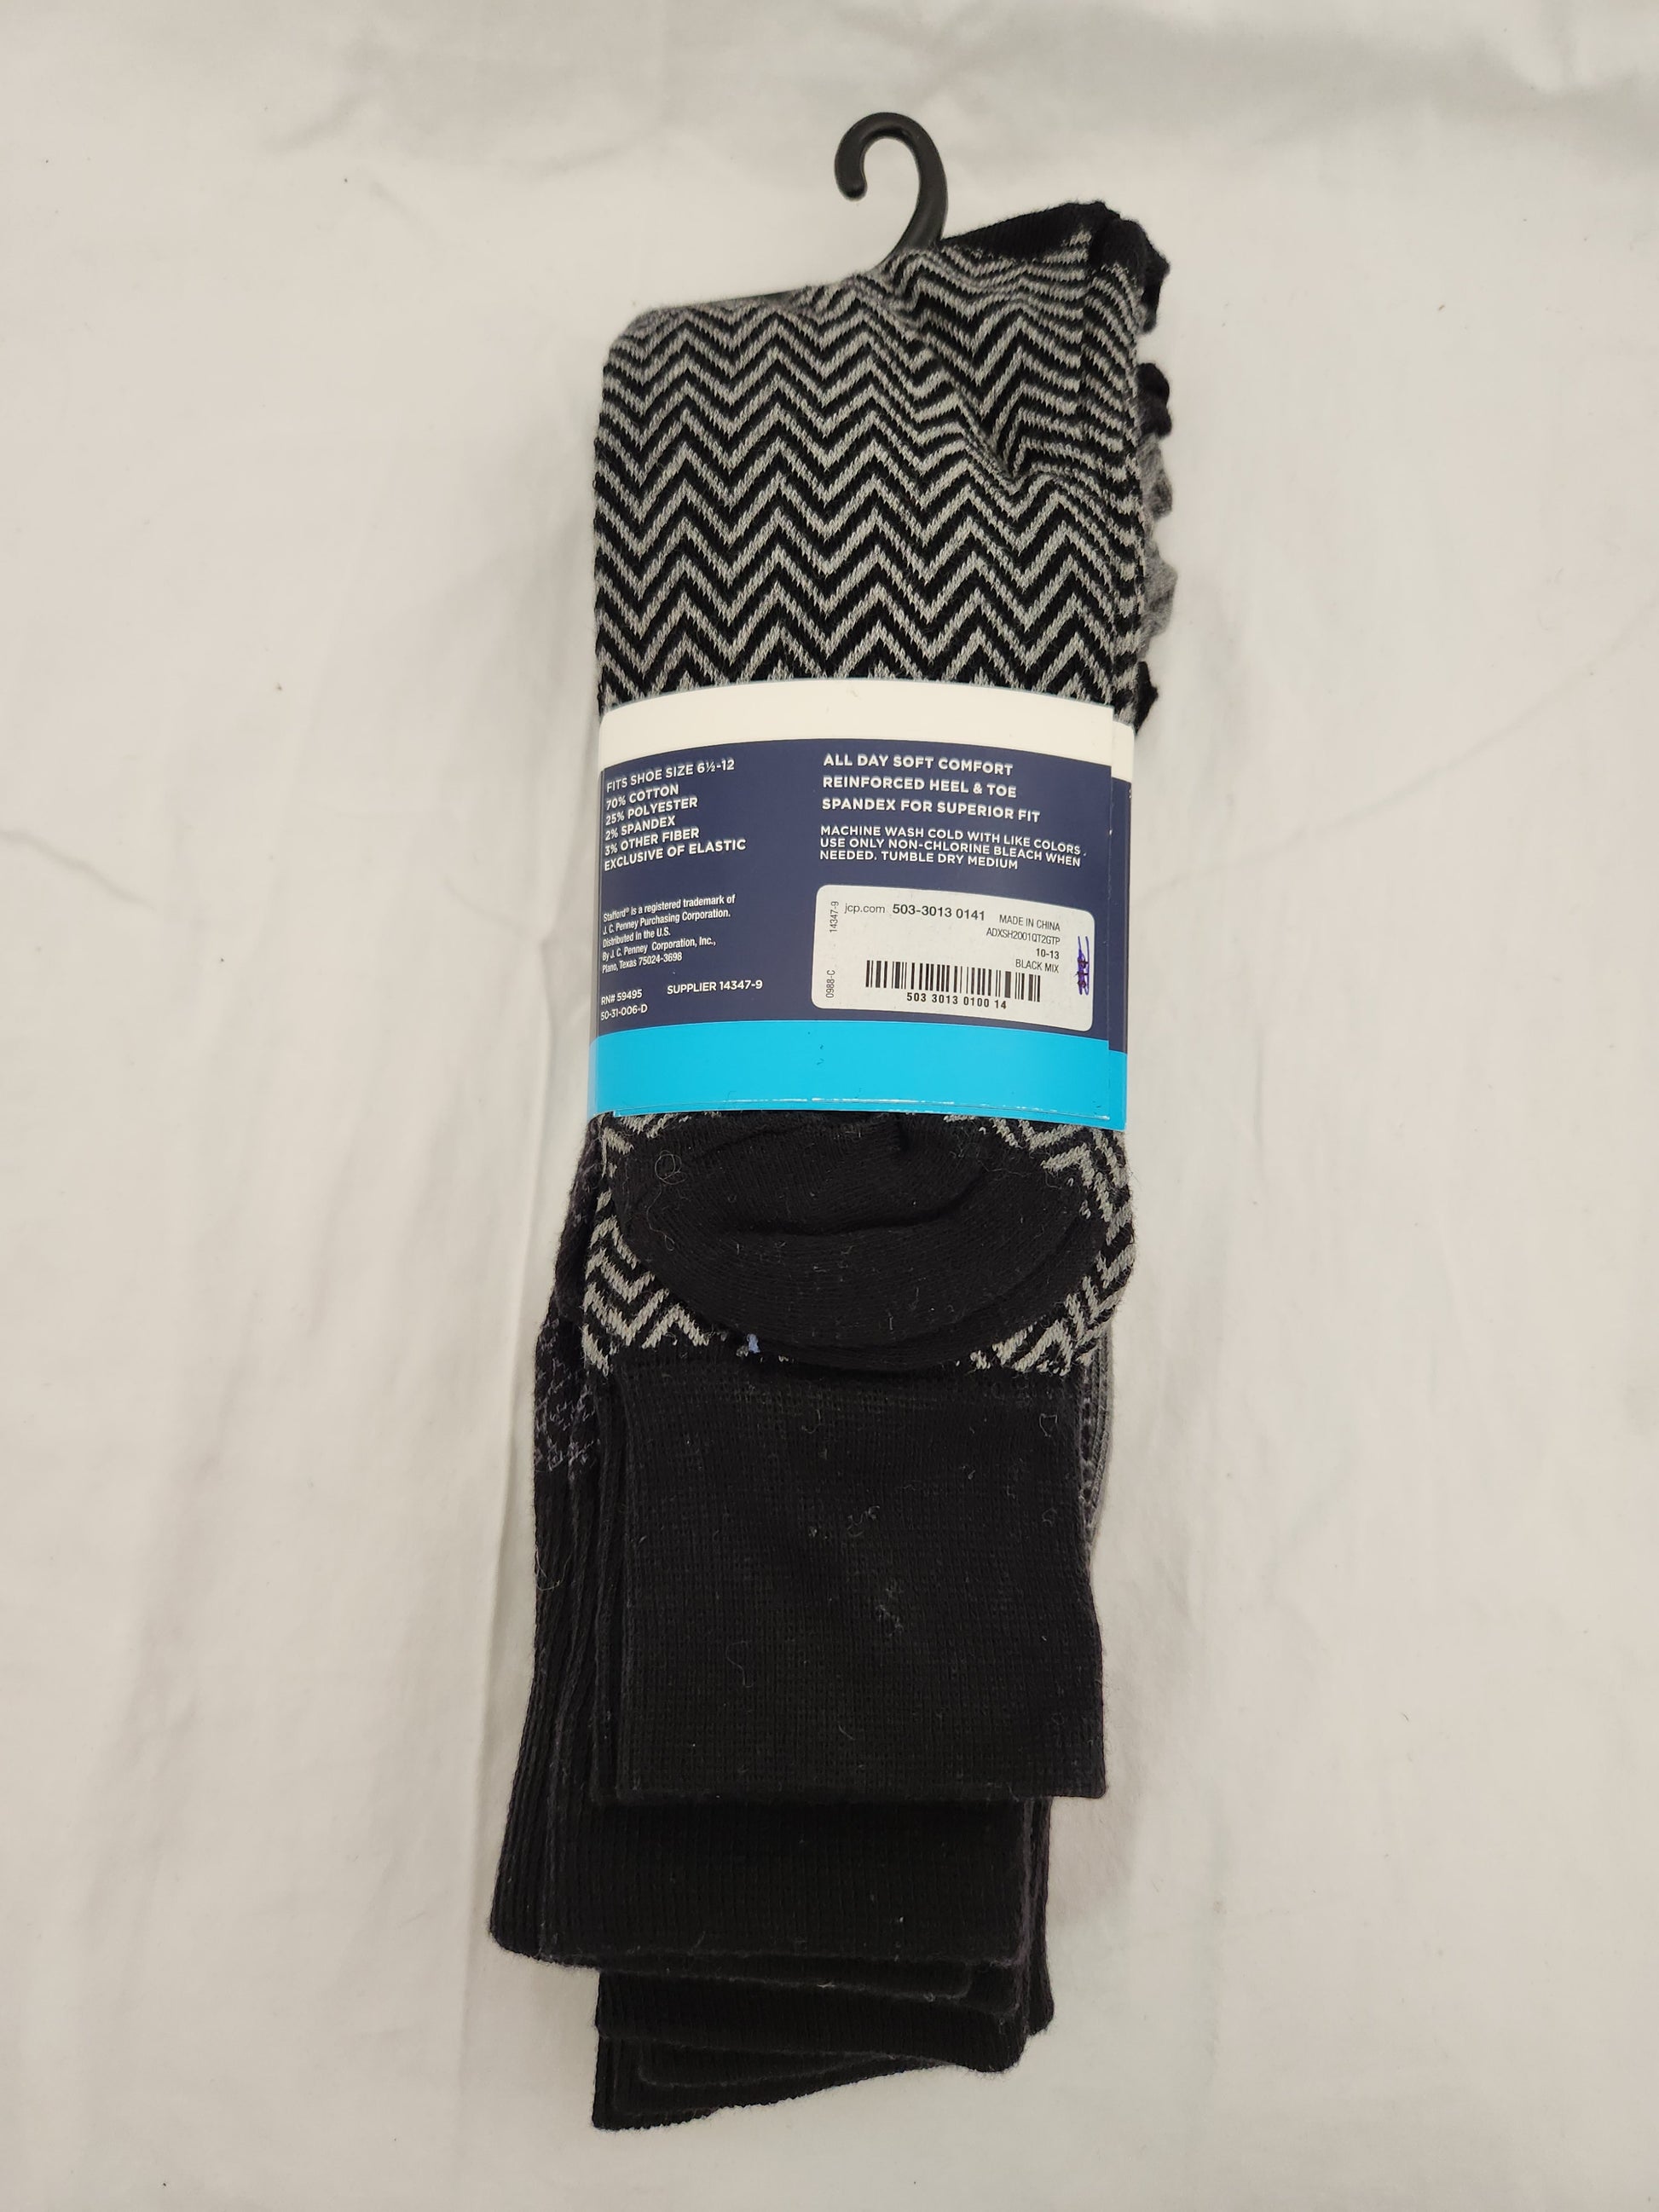 NWT - STAFFORD black grey Dry Cool Casual Socks - 10-13